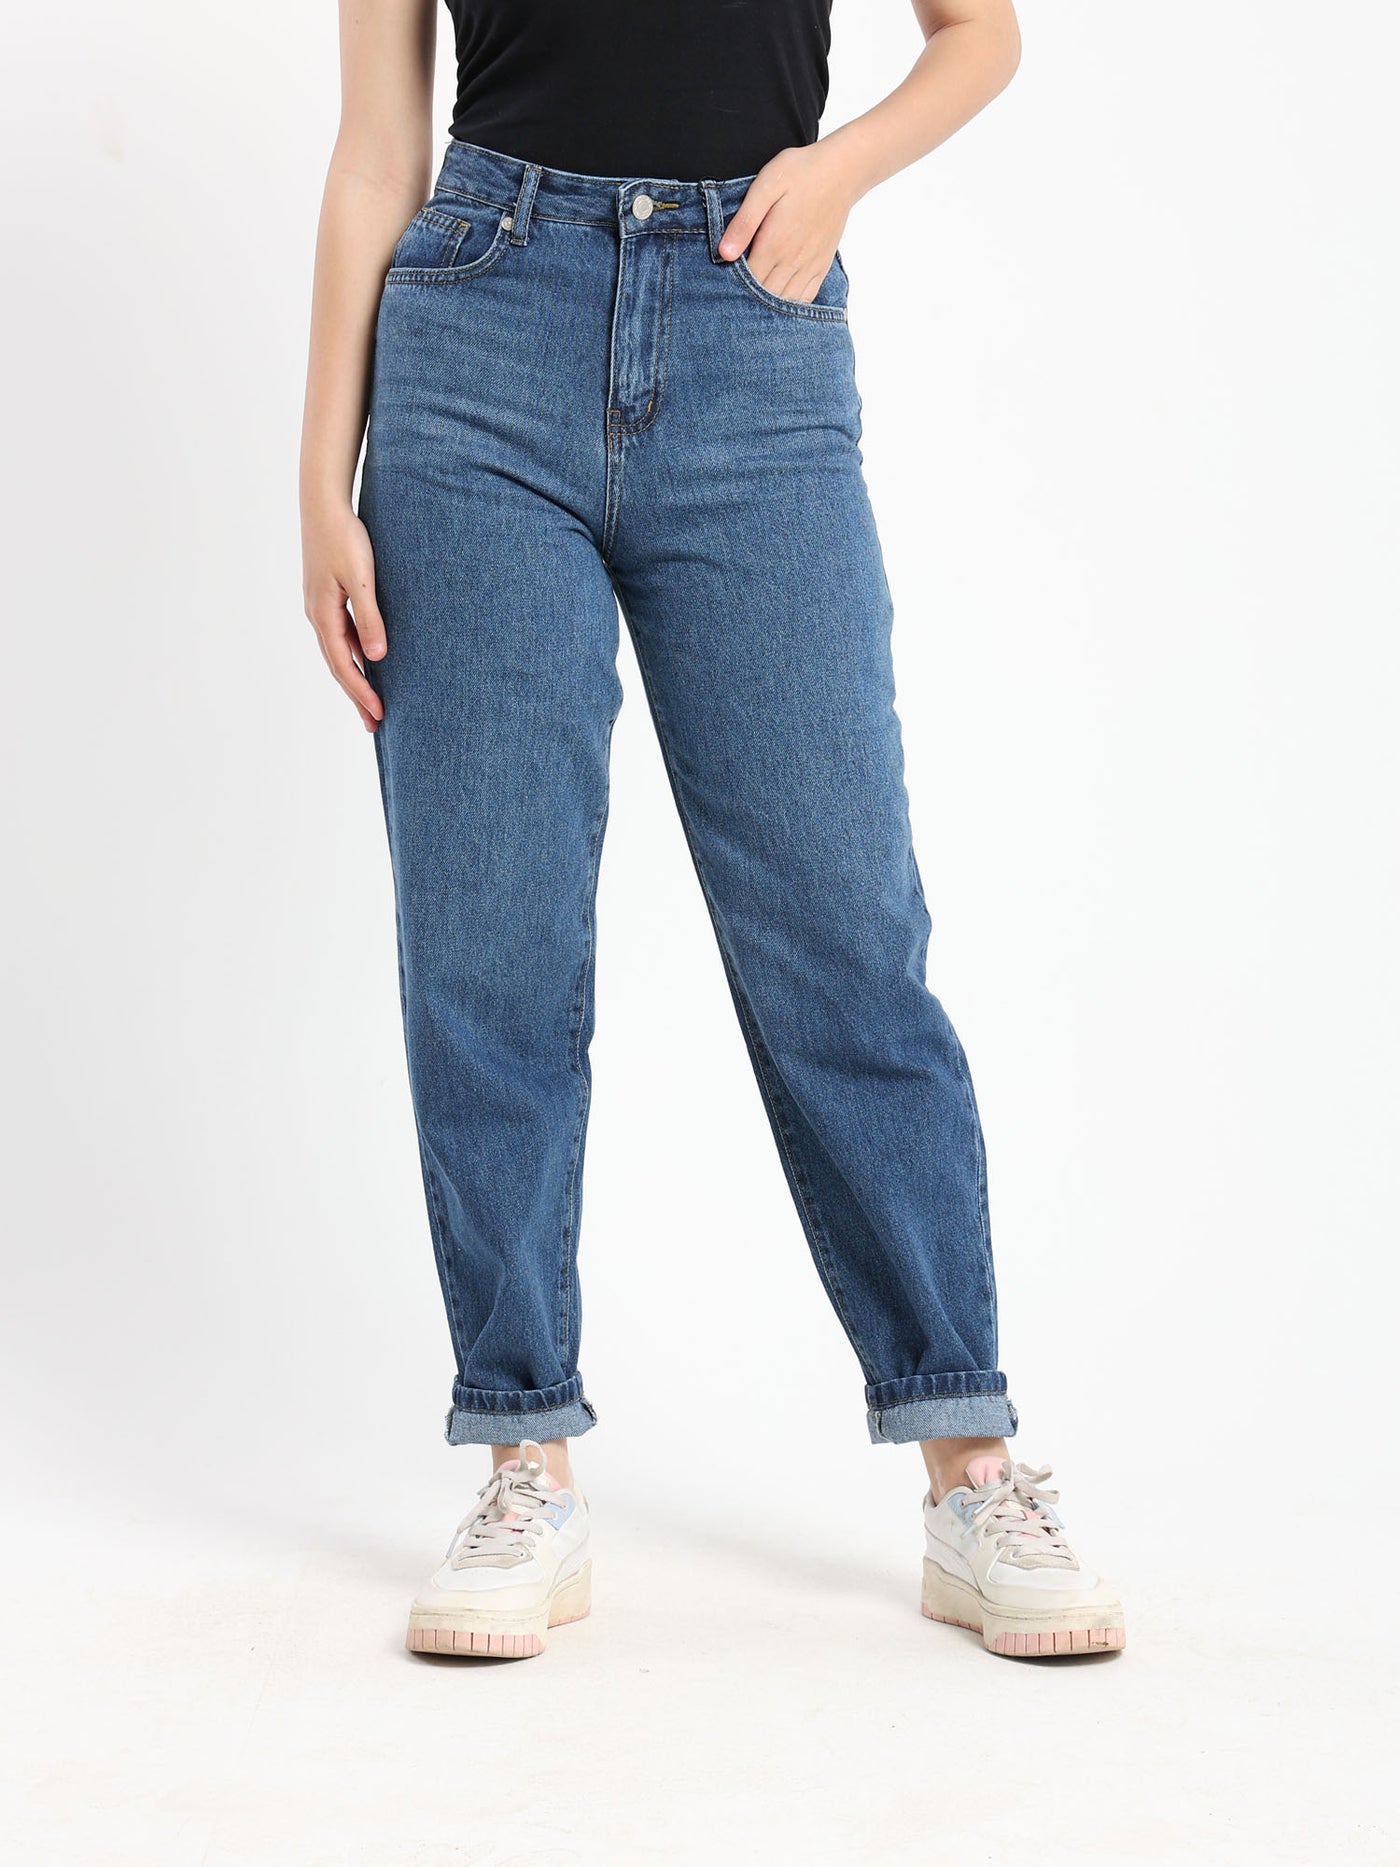 Jeans - High waist - Gaucho